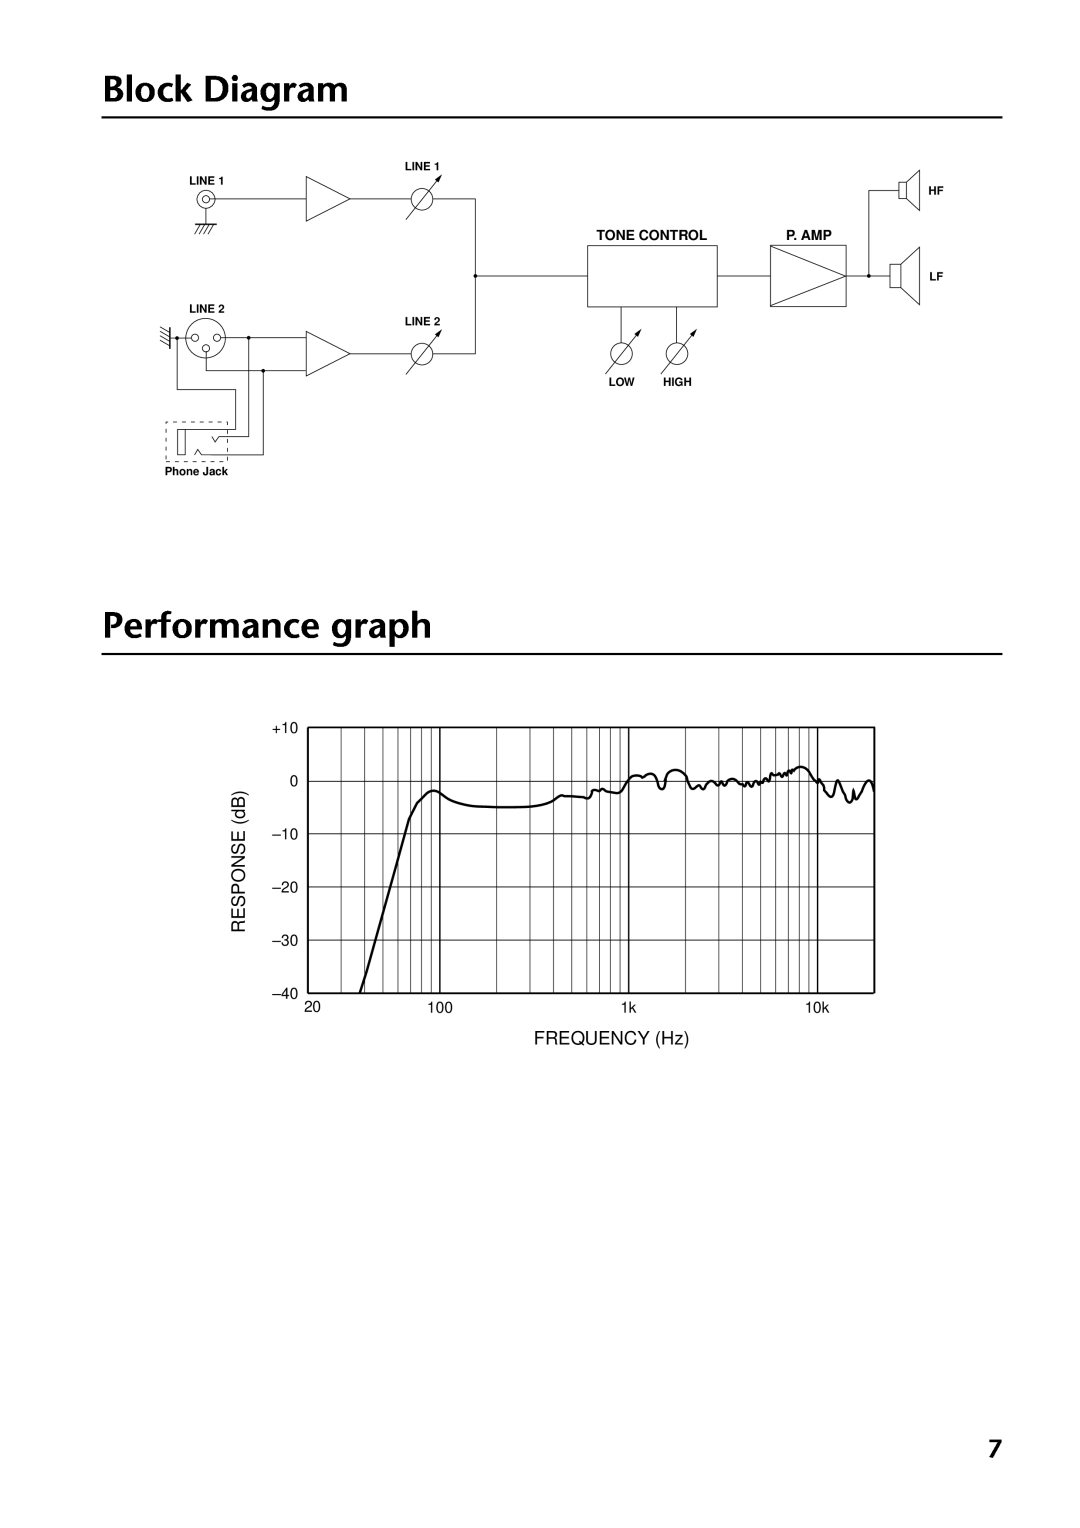 Yamaha MSP3 Block Diagram, Performance graph, RESPONSE dB, FREQUENCY Hz, +10 0 -10 -20 -30, Tone Control, P. Amp, Line 